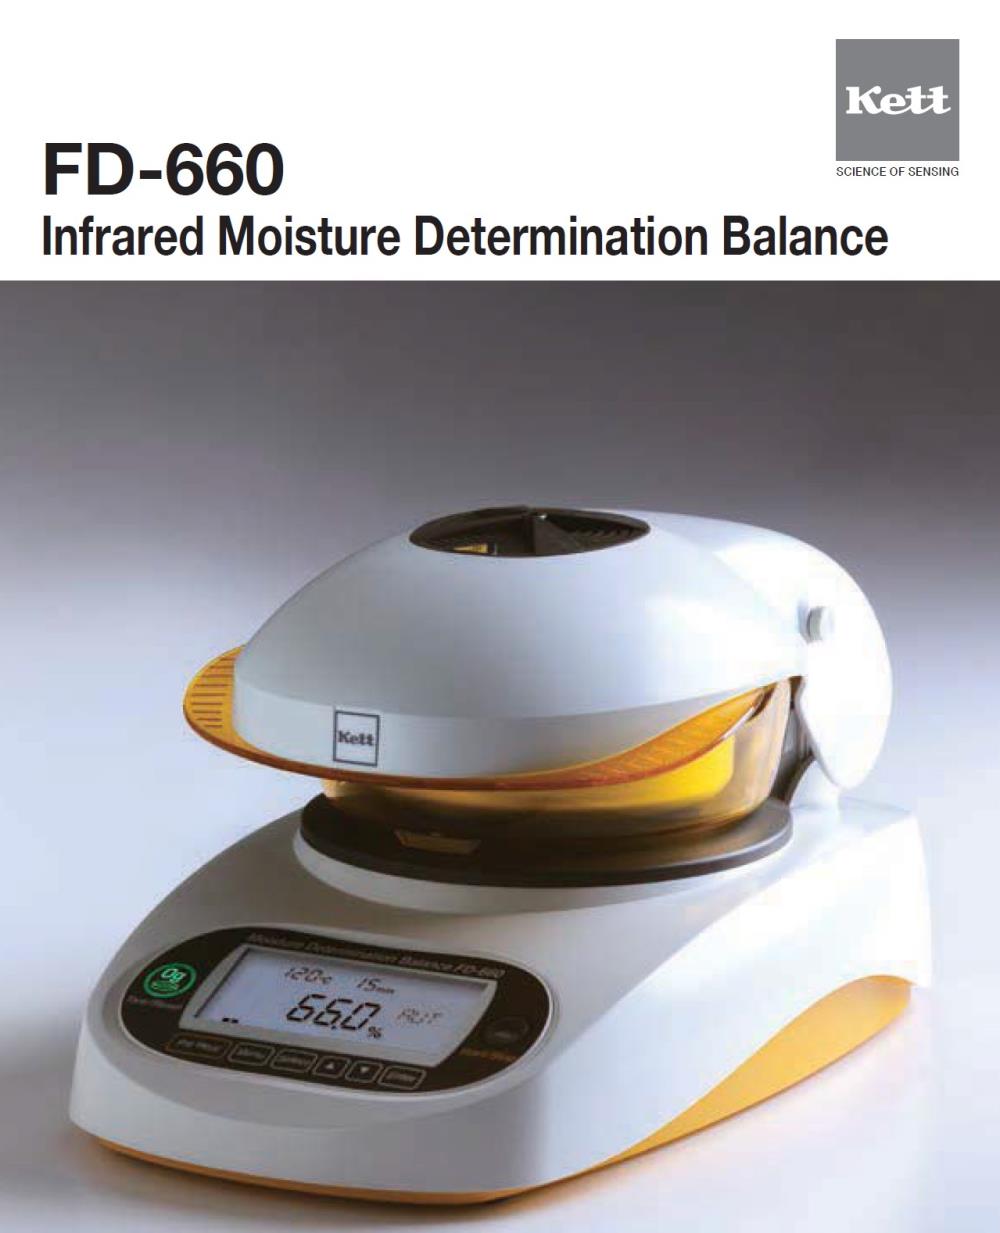 Infrared Moisture Determination Balance. Brand : Kett (Japan), Model: FD-660